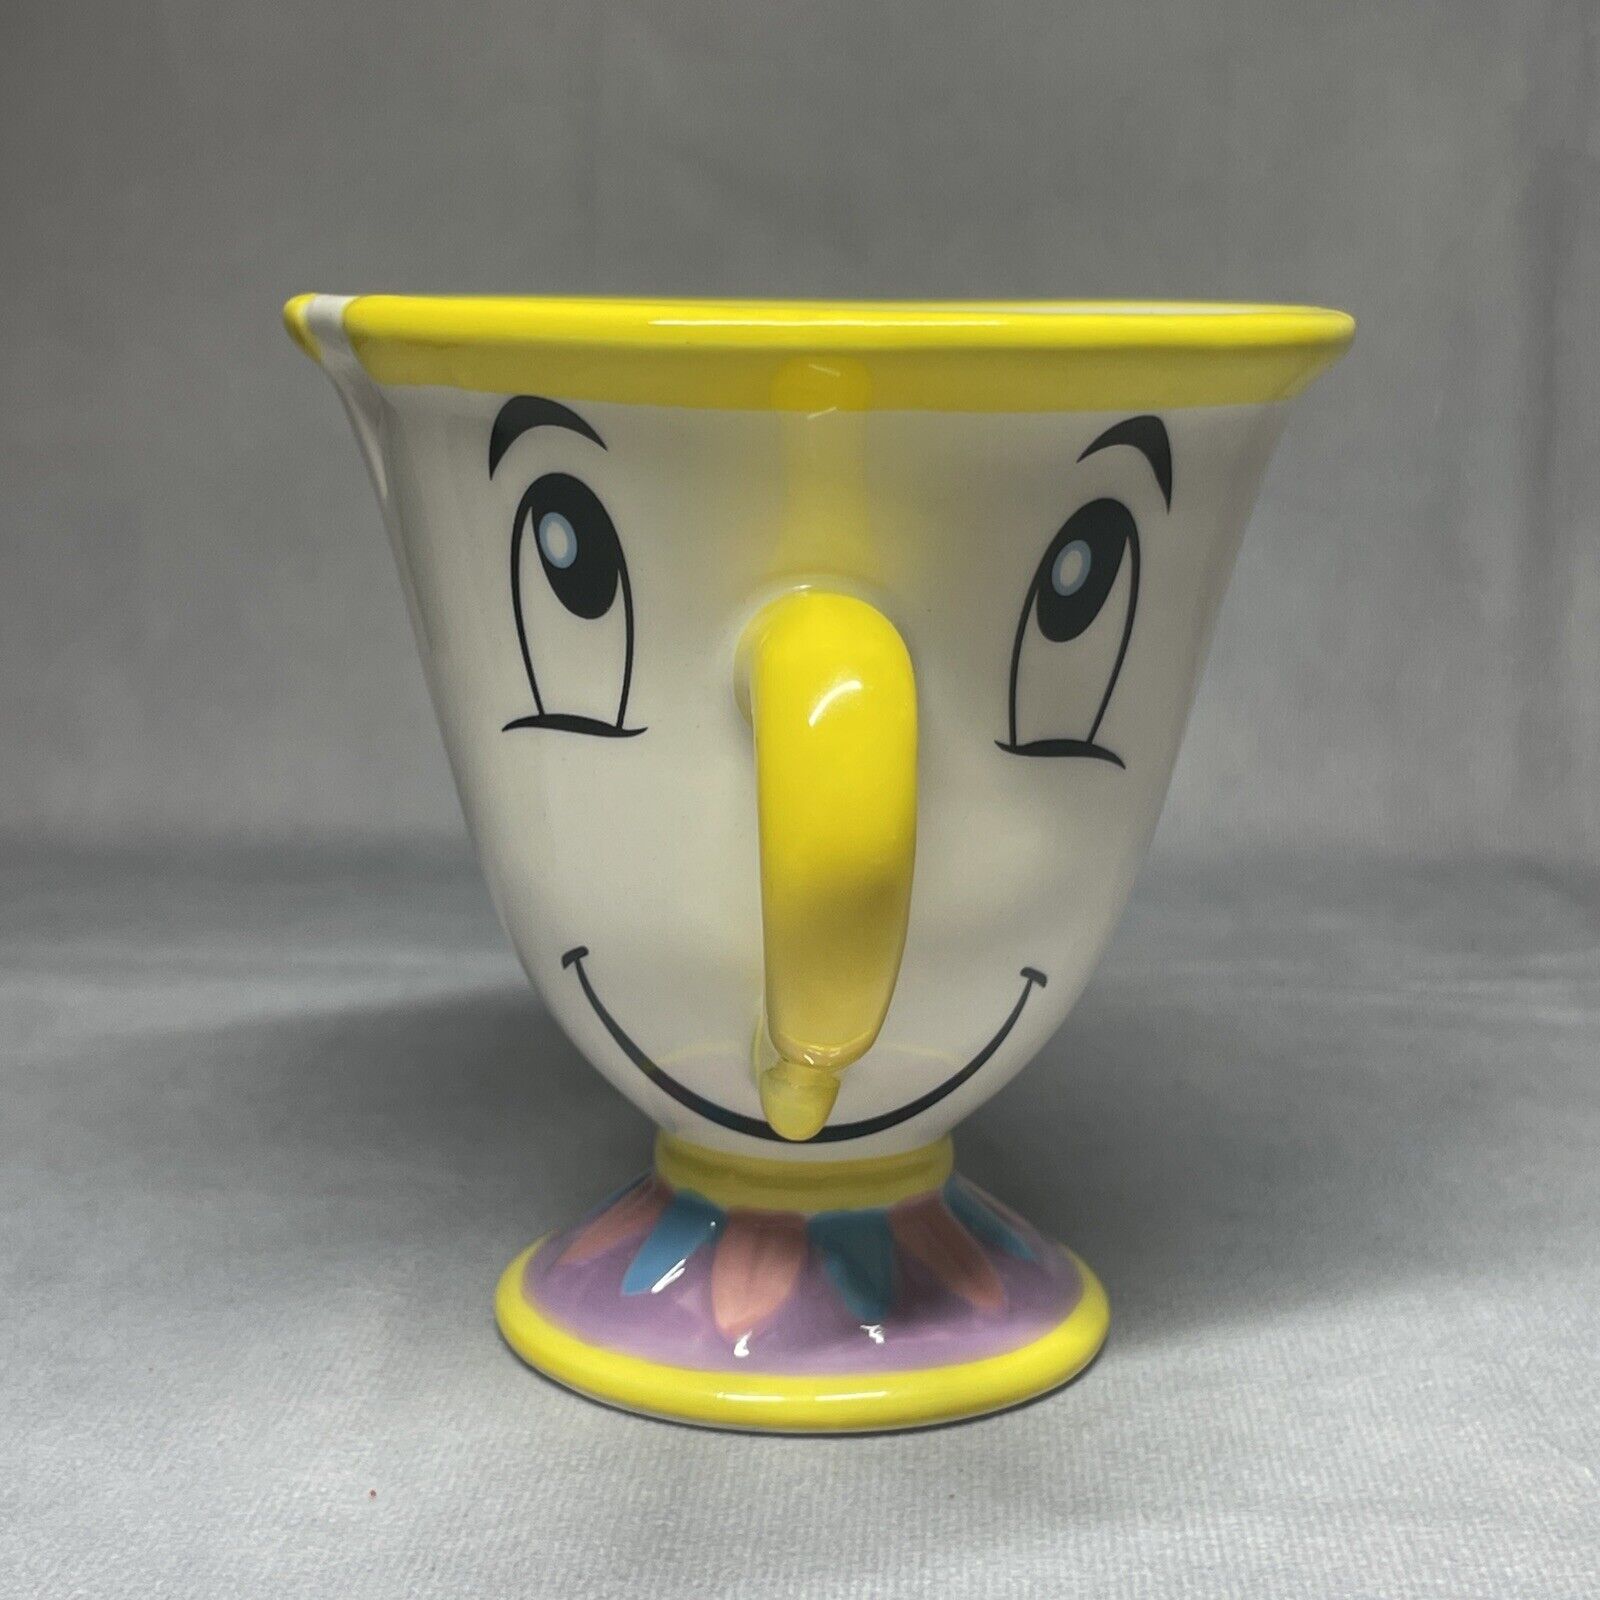 Disney Beauty & the Beast Chip Mug Vintage Ceramic Teacup